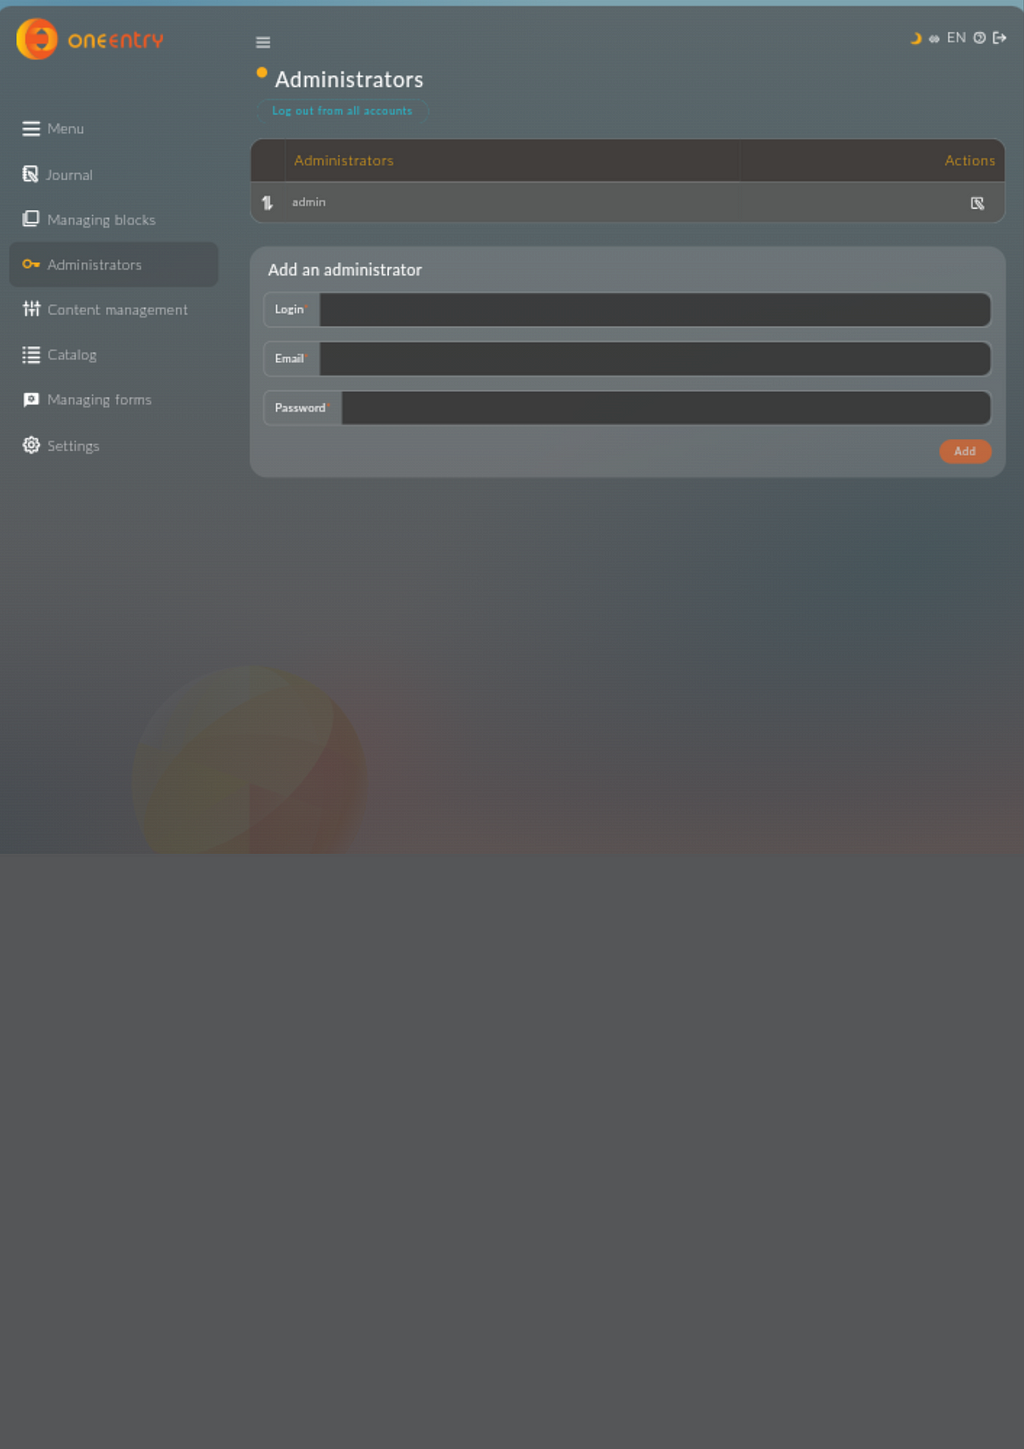 A screenshot of the Administrator dashboard